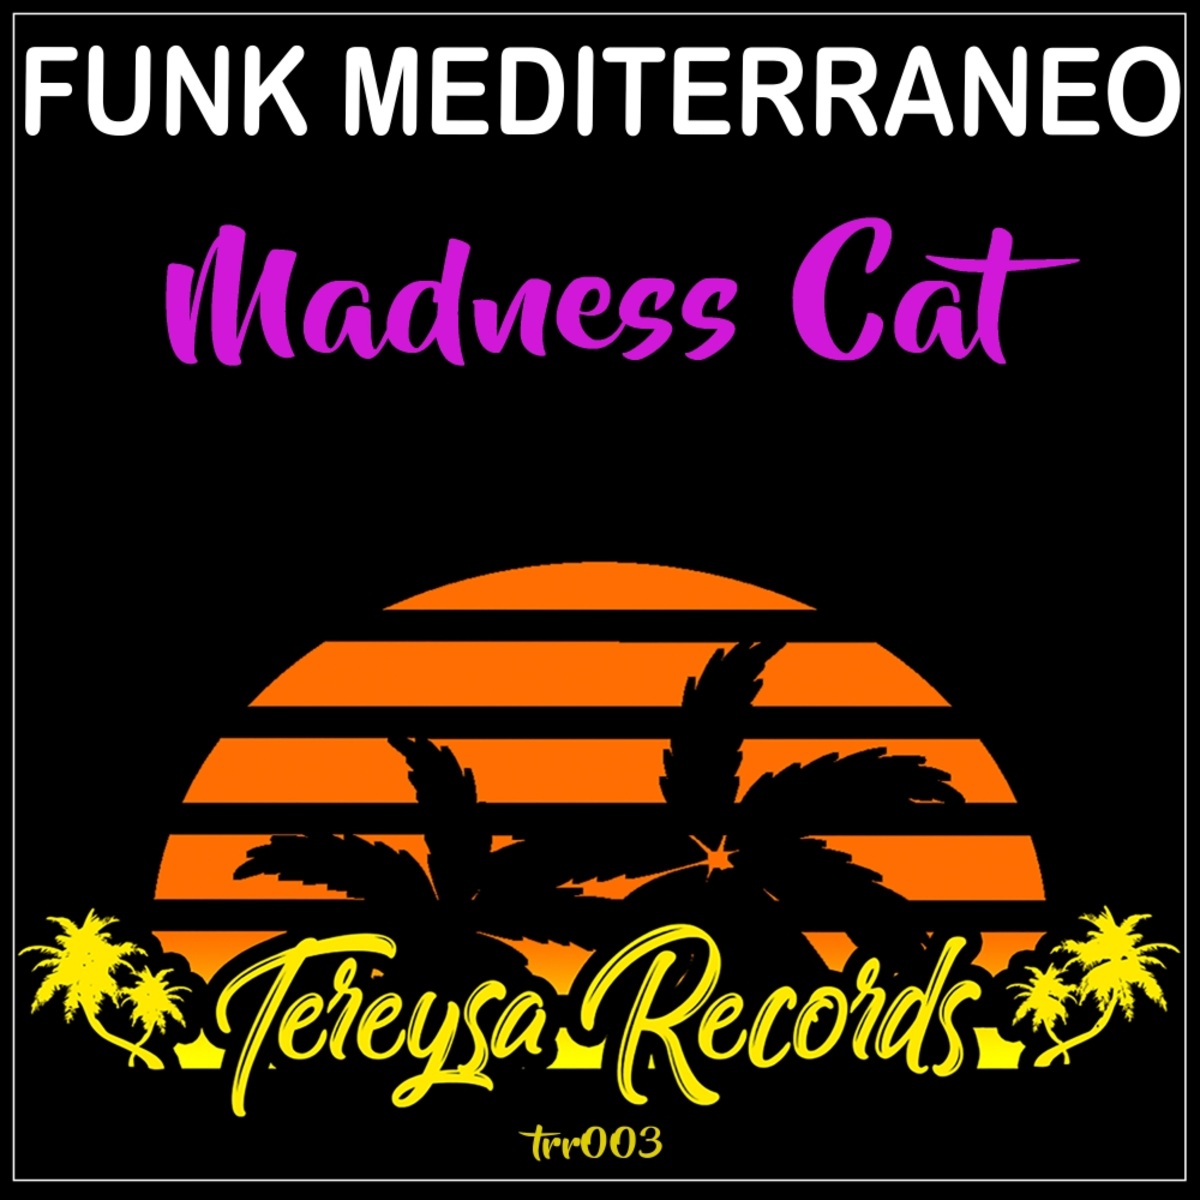 Funk Mediterraneo - Madness Cat / Tereysa Records